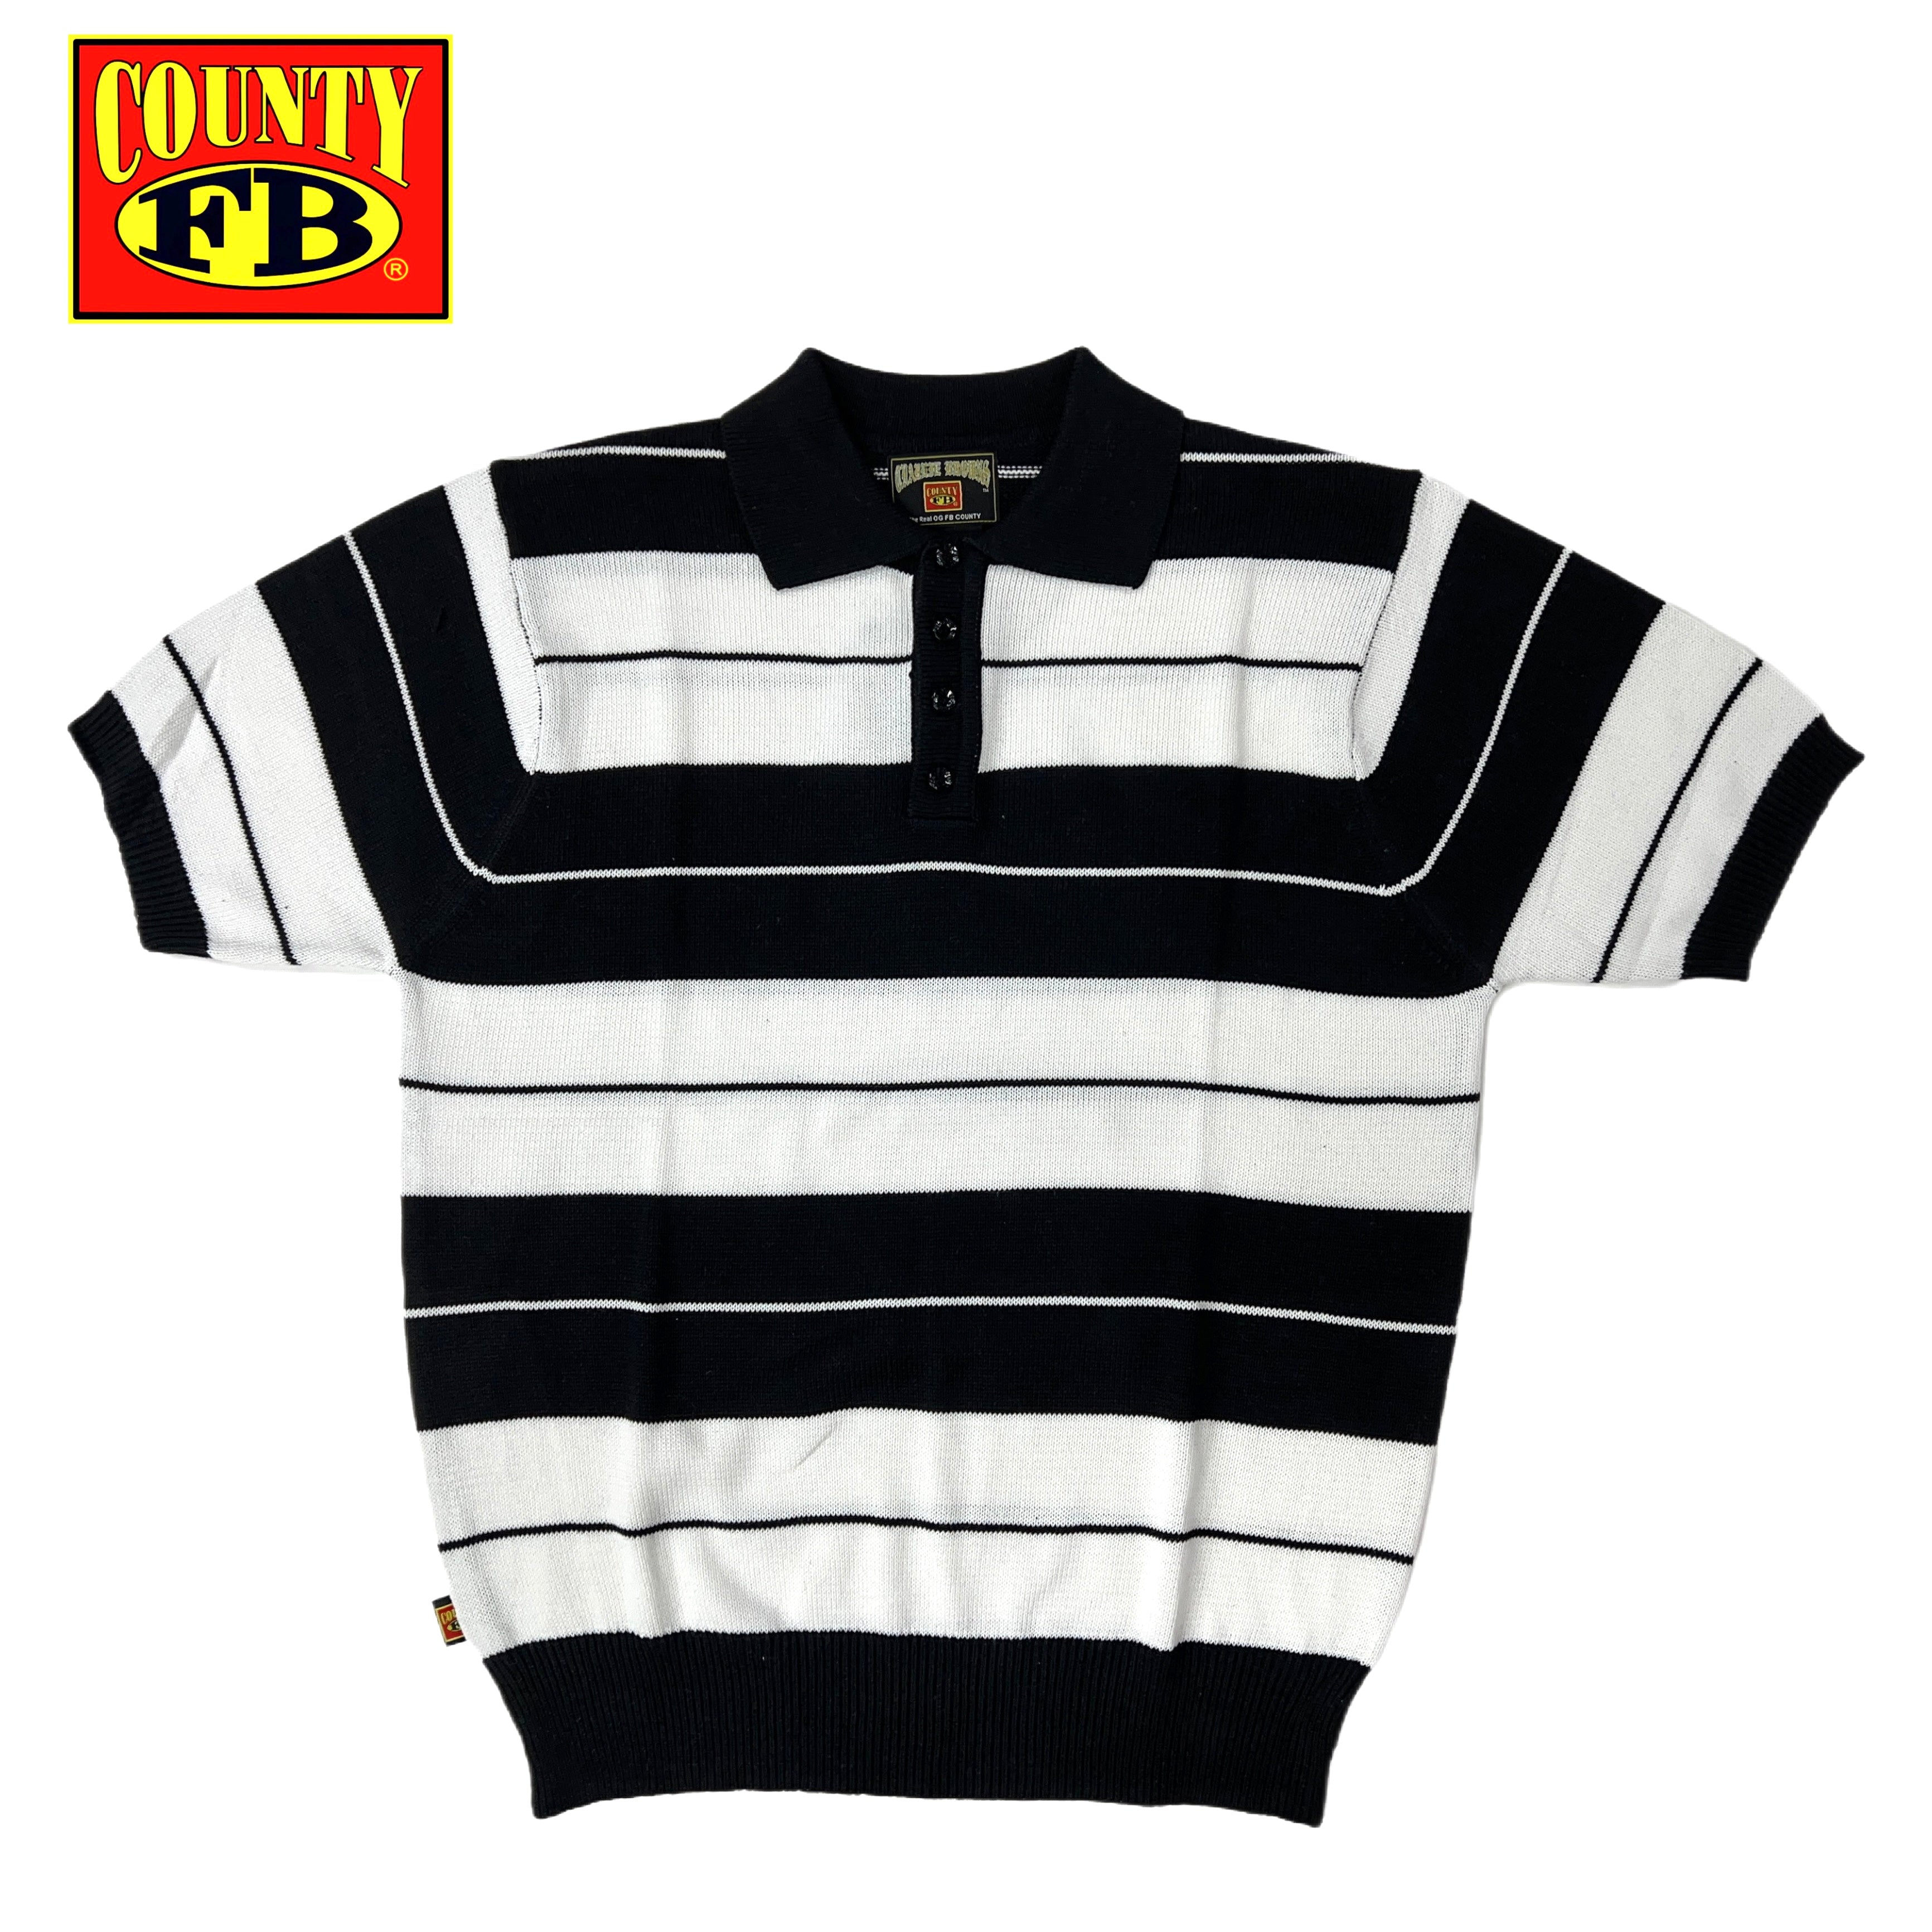 FB County Charlie Brown Shirt - Black/White & Black/Grey